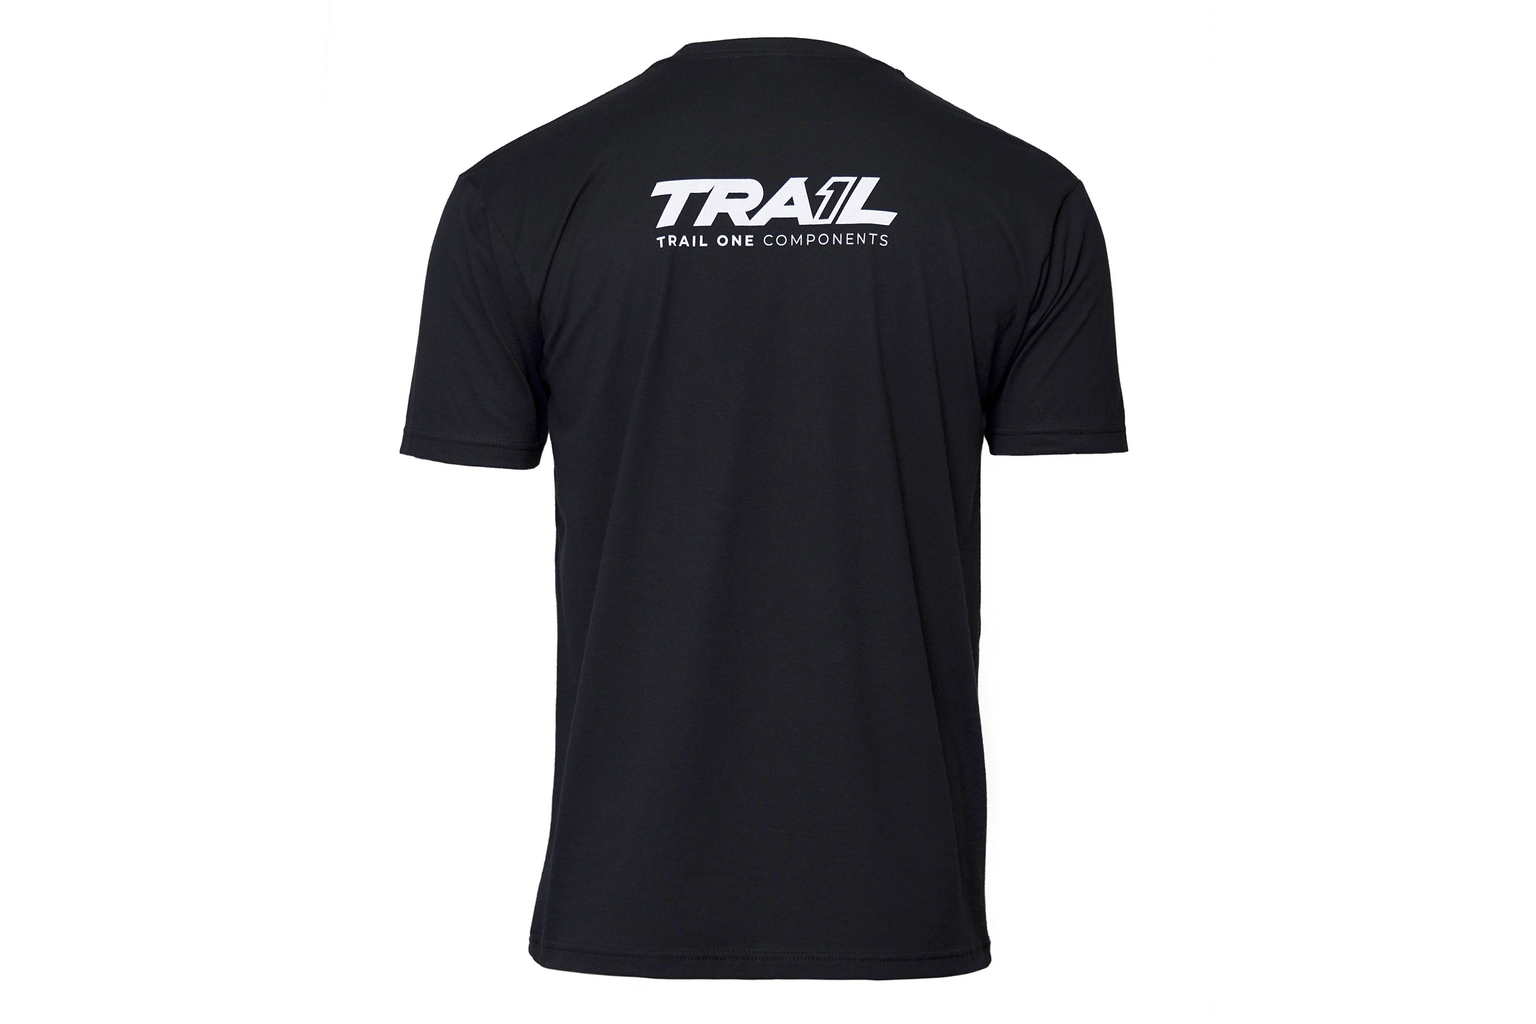 Trail One Components Shirt, Black - T-Shirt - T1 Shirt